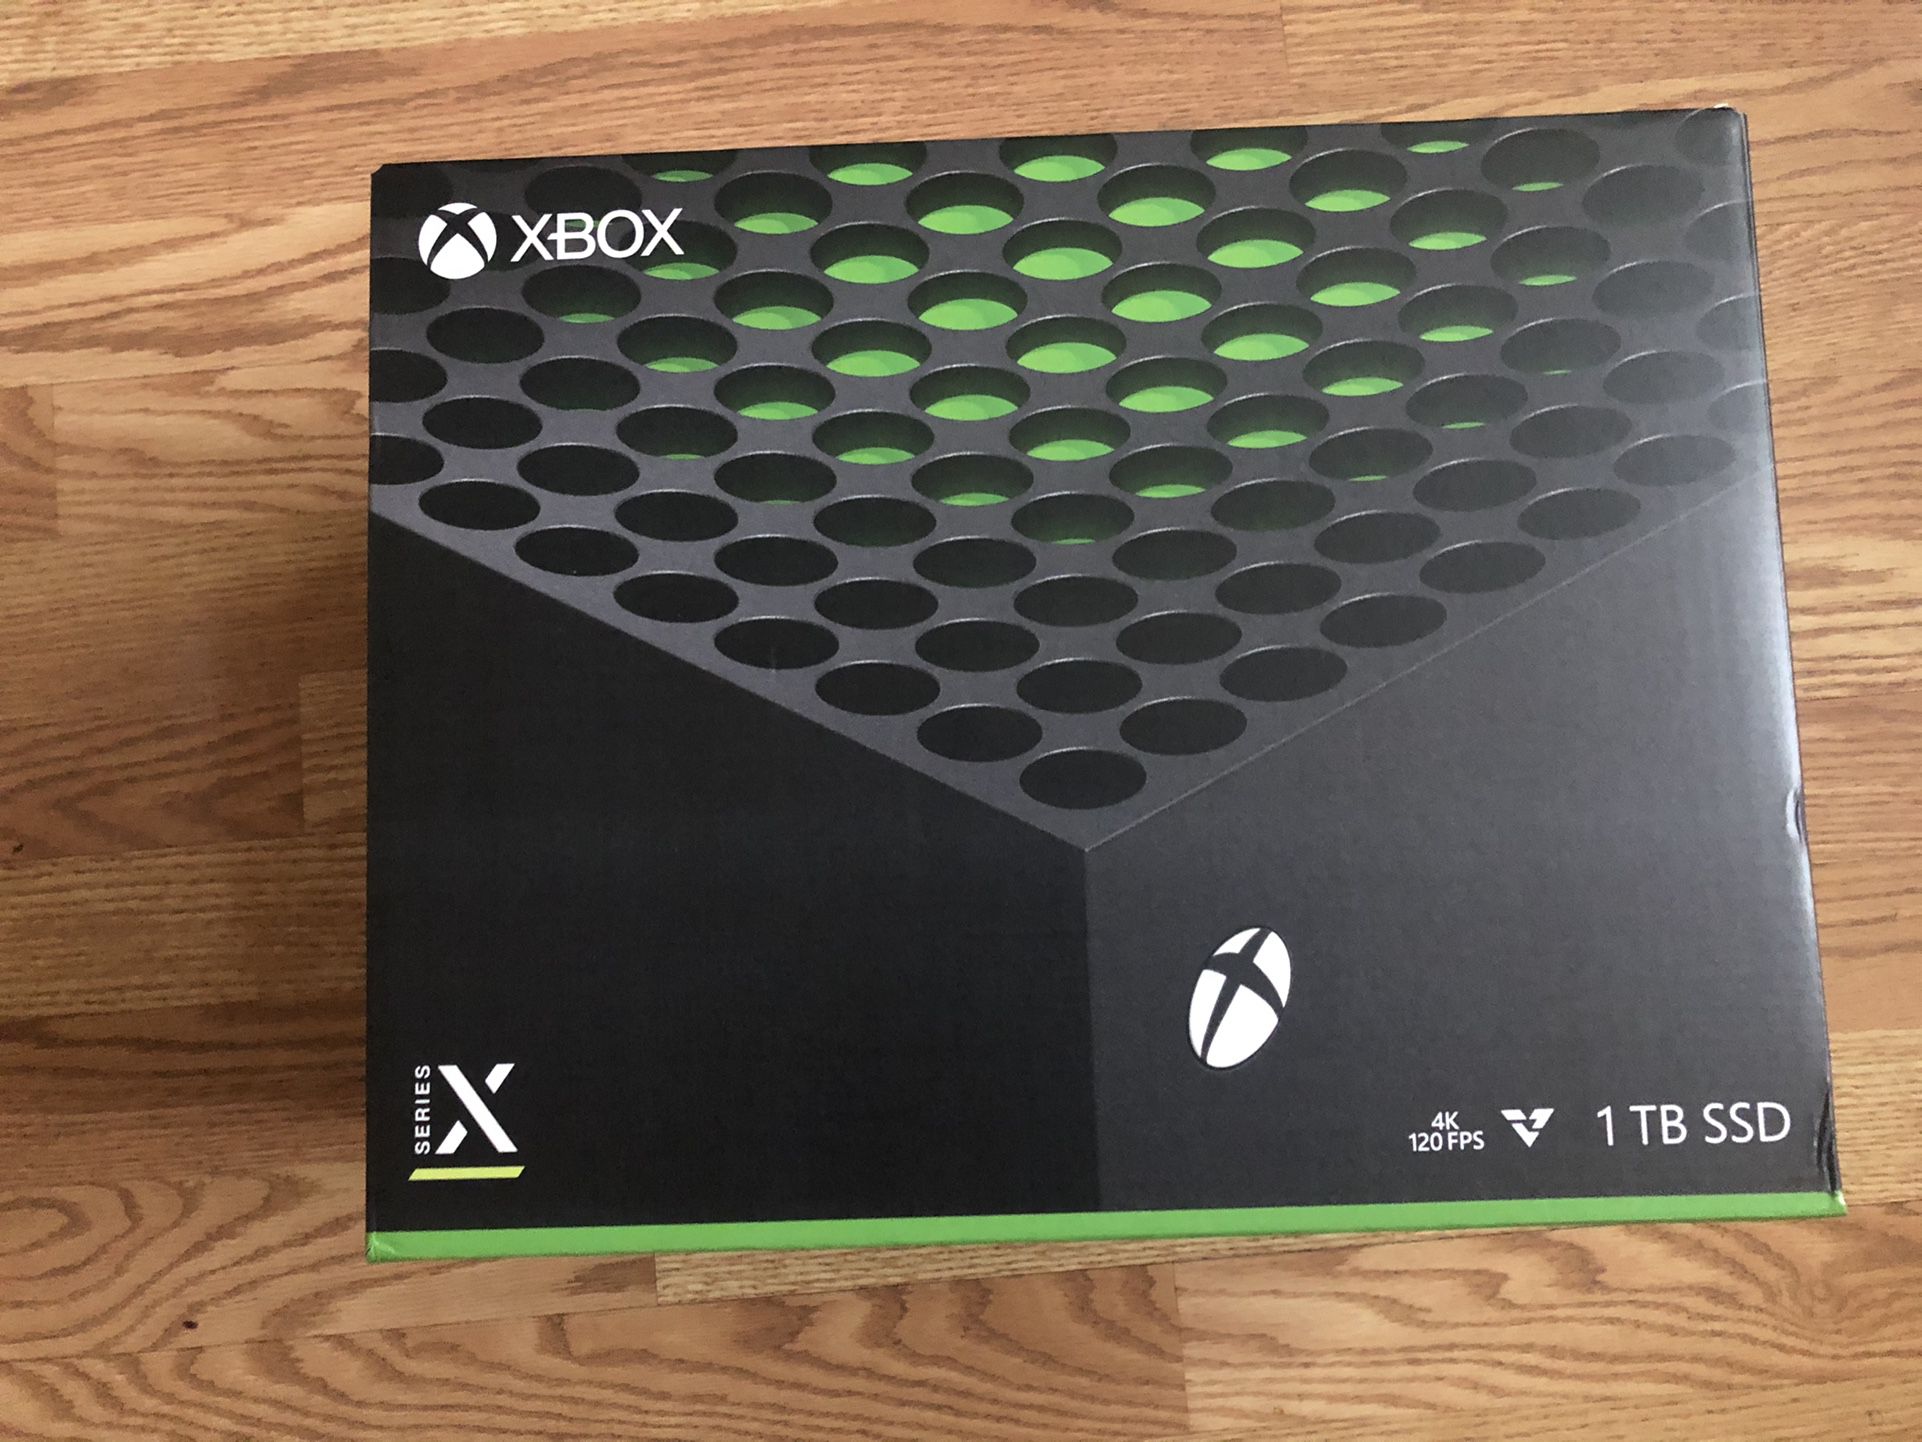 Xbox Series X. Store Price